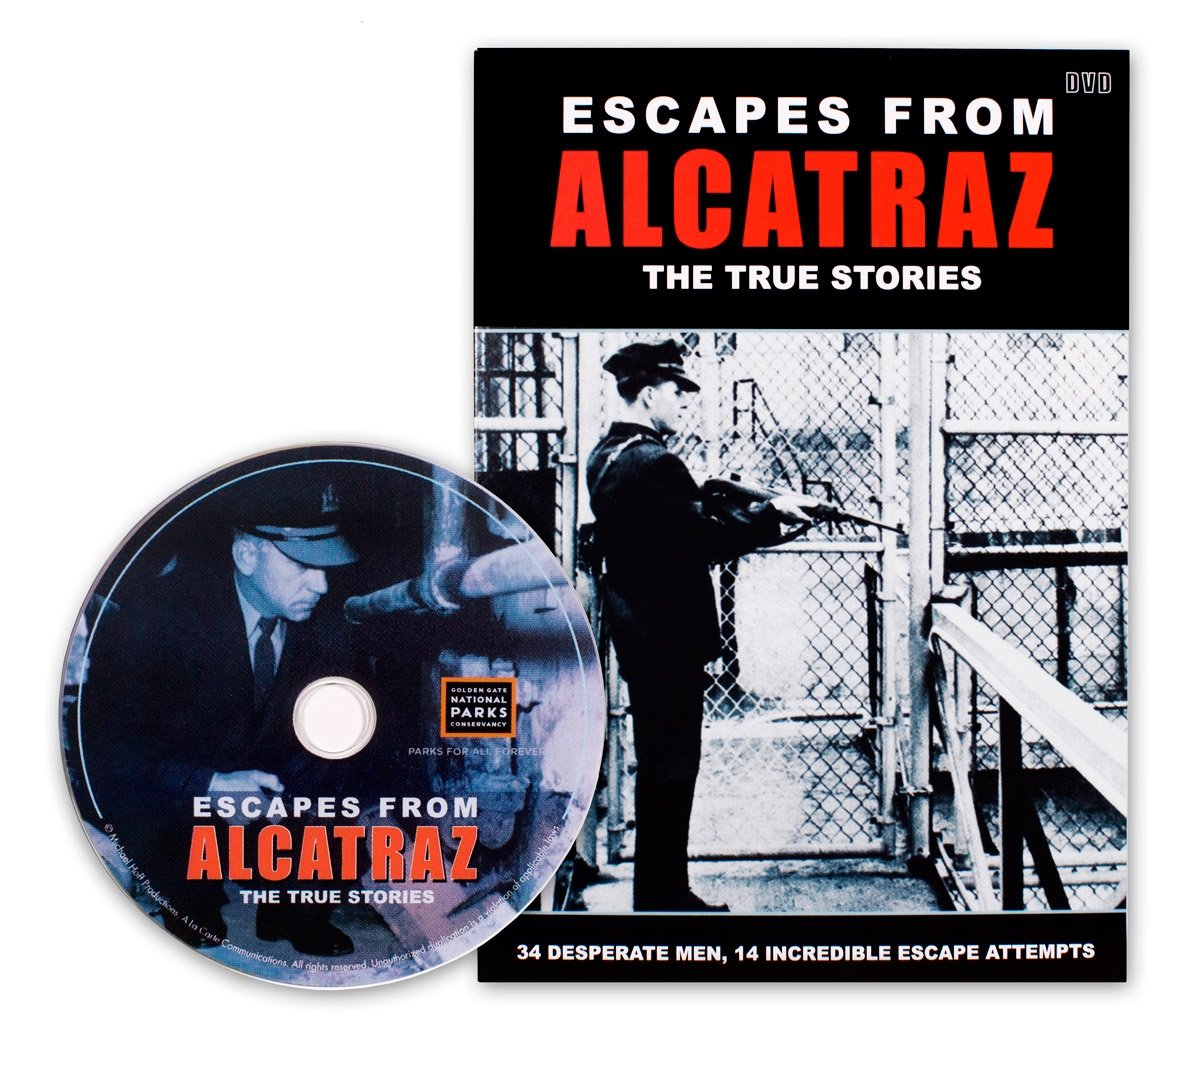 Escapes from Alcatraz DVD, featuring inmate escape attempts from notorious former prison US Penitentiary Alcatraz.